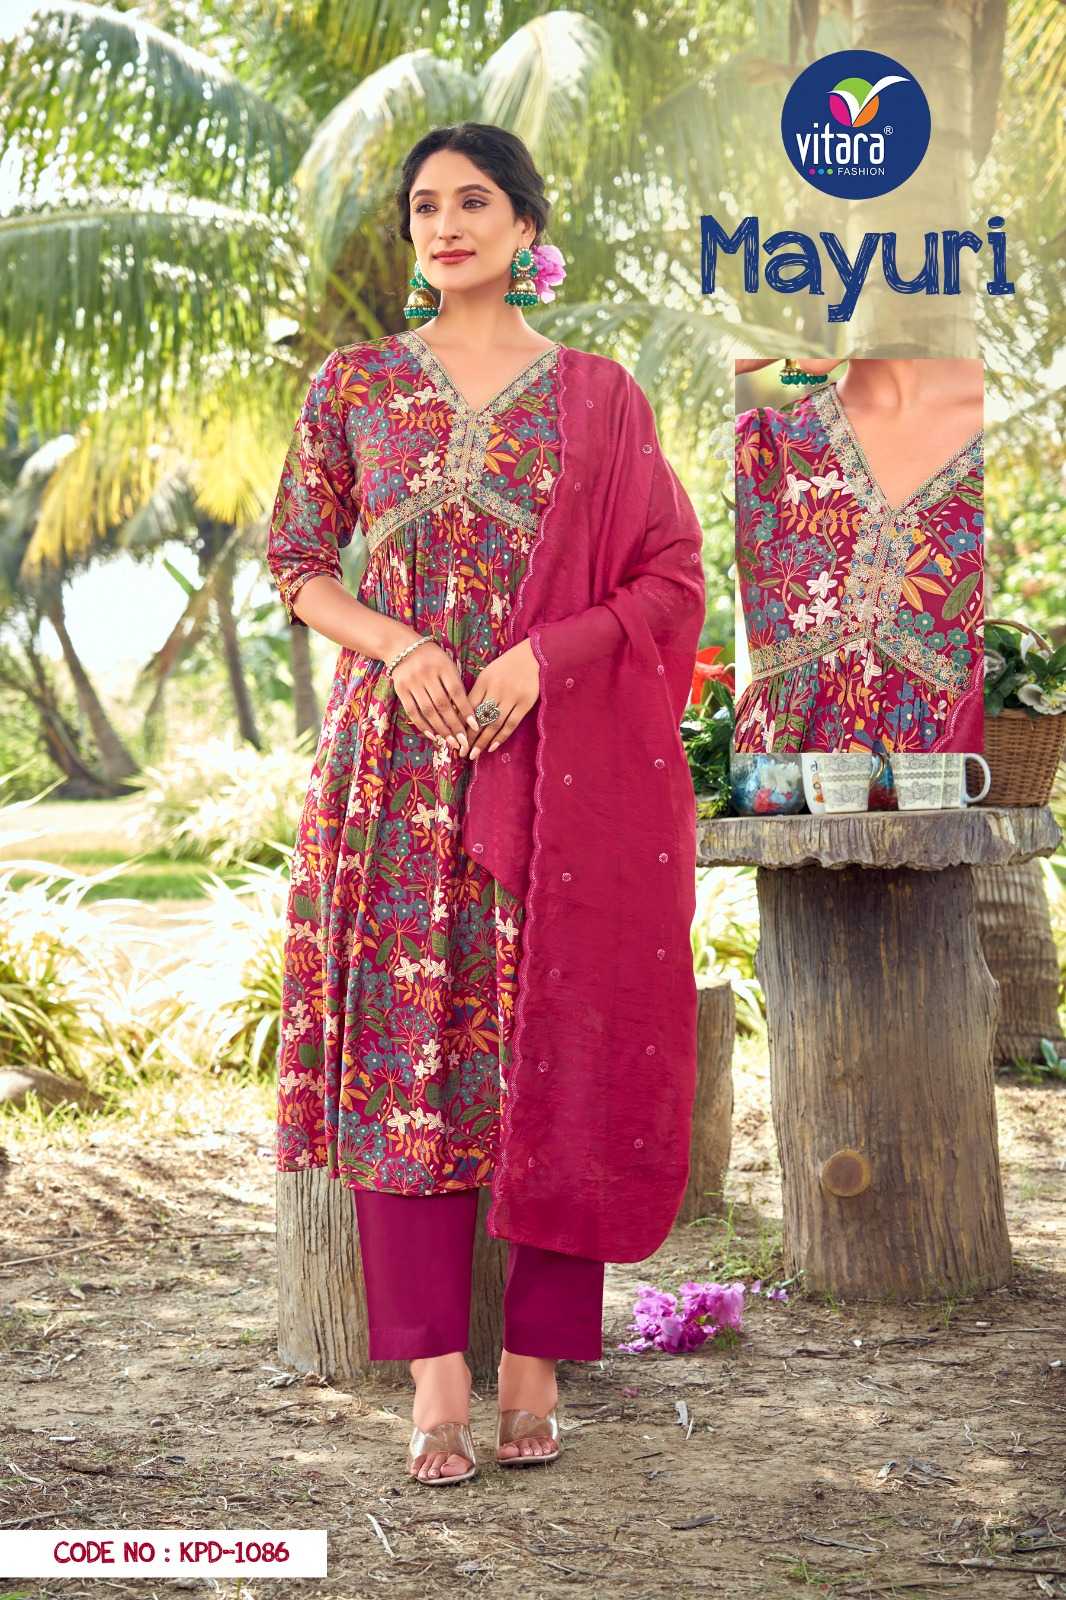 vitara fashion mayuri fancy alia style kurti pant and dupatta combo set